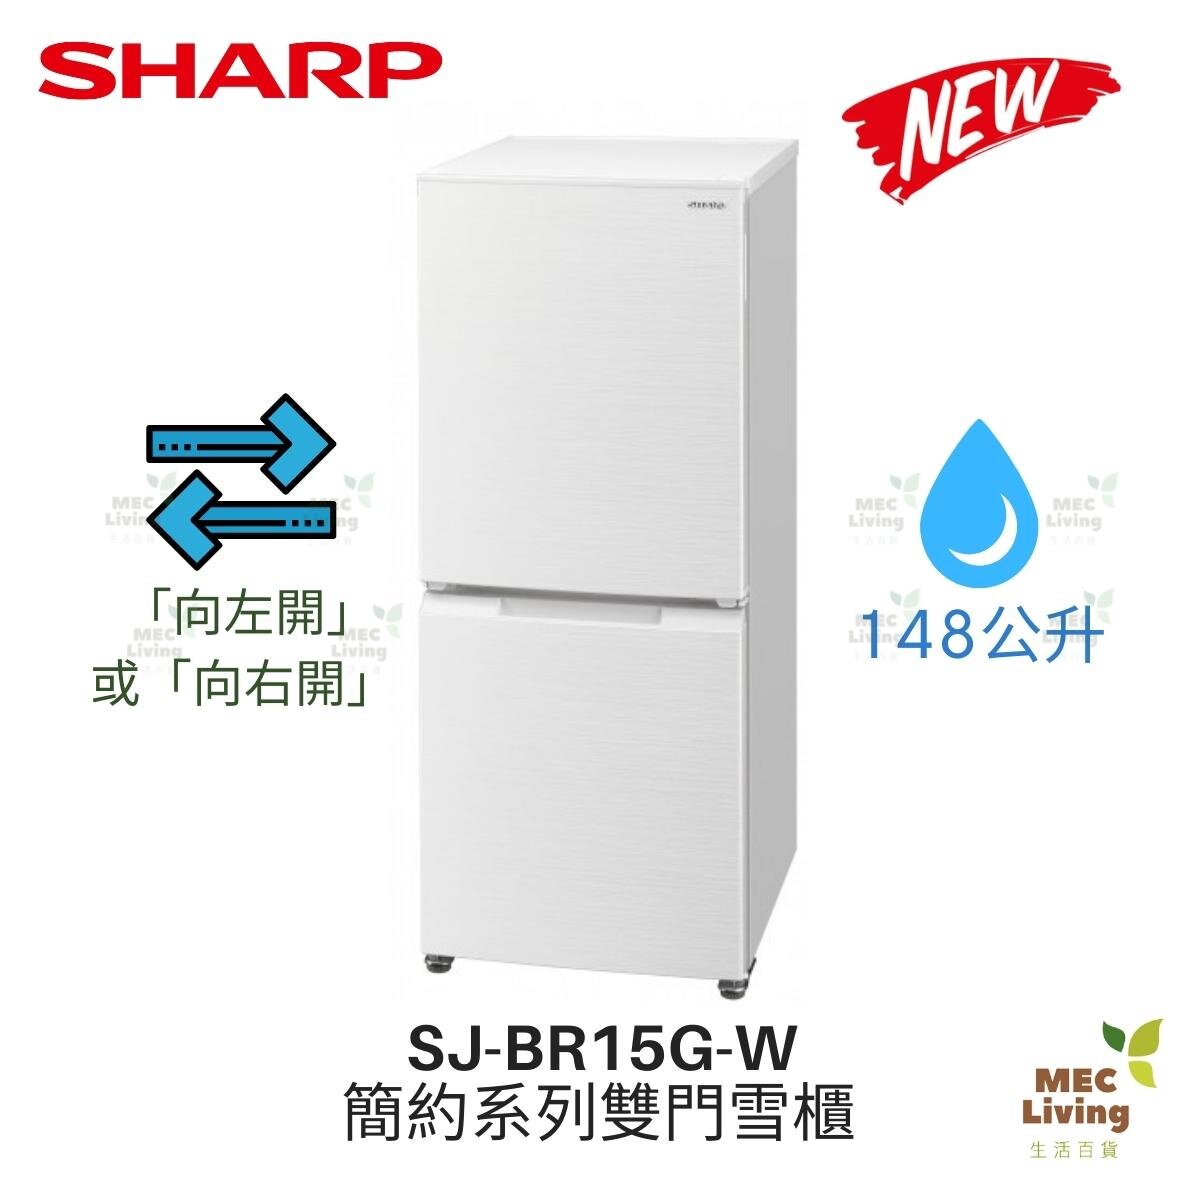 sharp | SJ-BR15G-W 148 Liter Elegance Series Refrigerator - Right